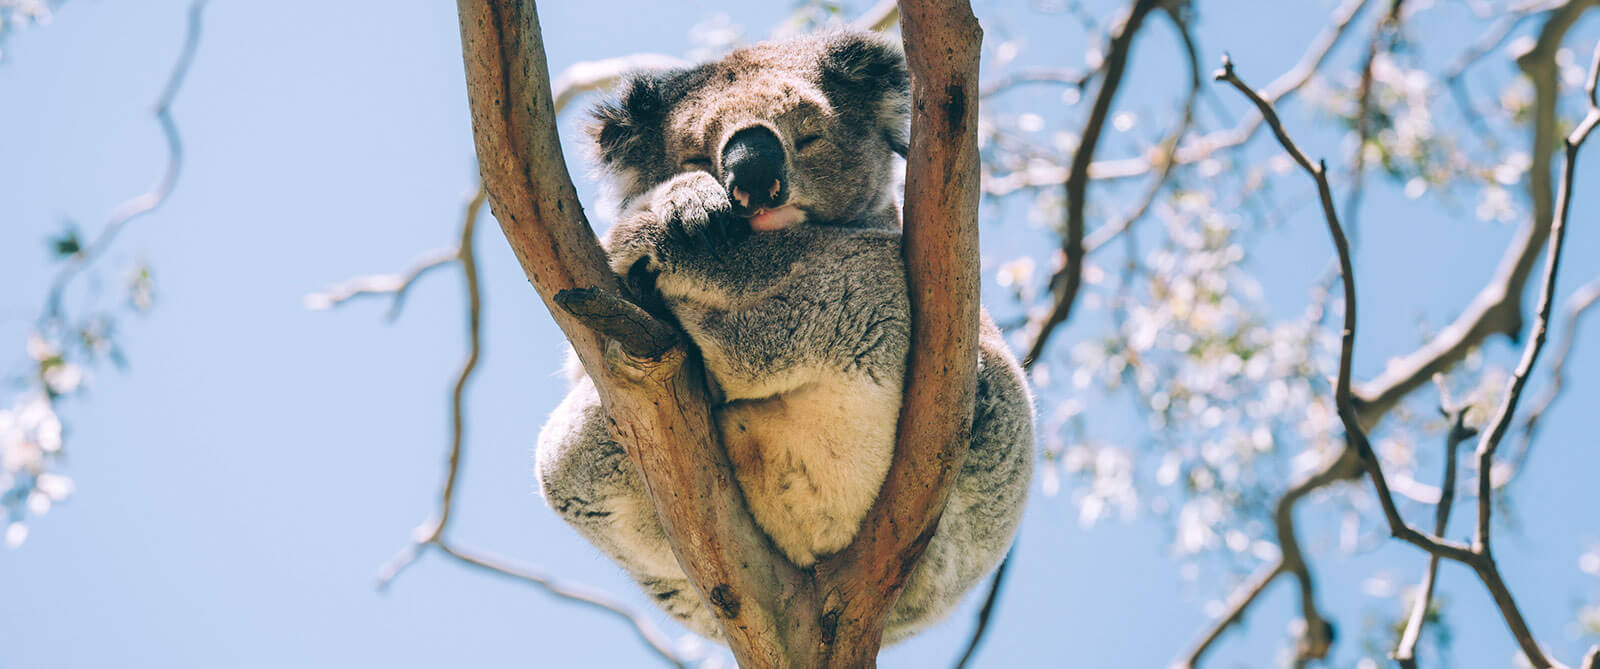 Koala in a Tree - Family Trip to Australia - Australia Wildlife and Reef Vacations